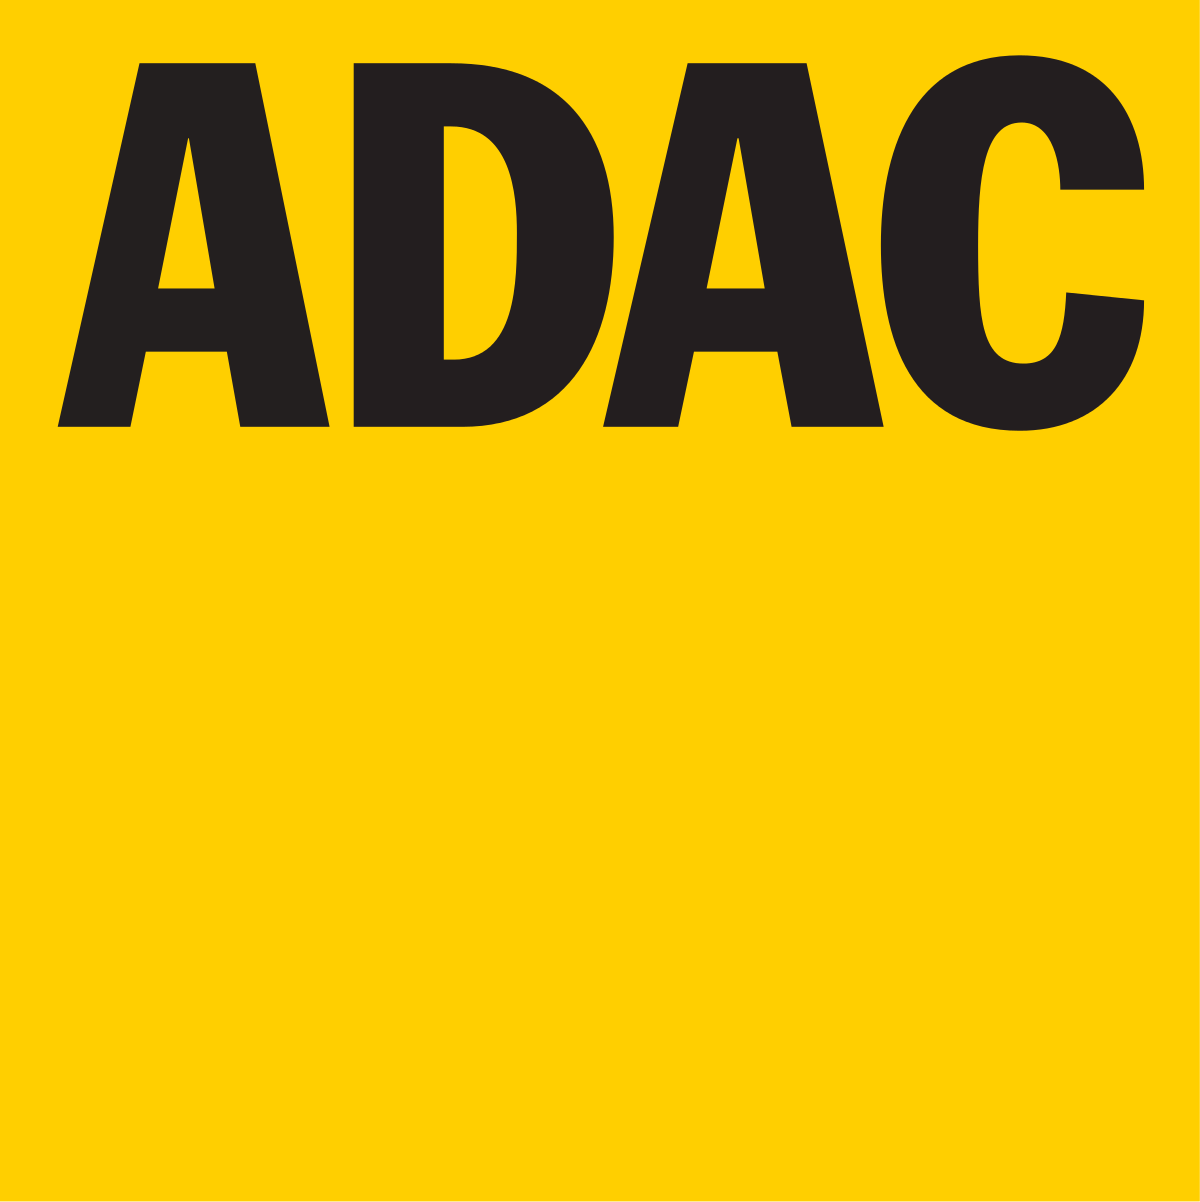 ADAC – Wikipedia